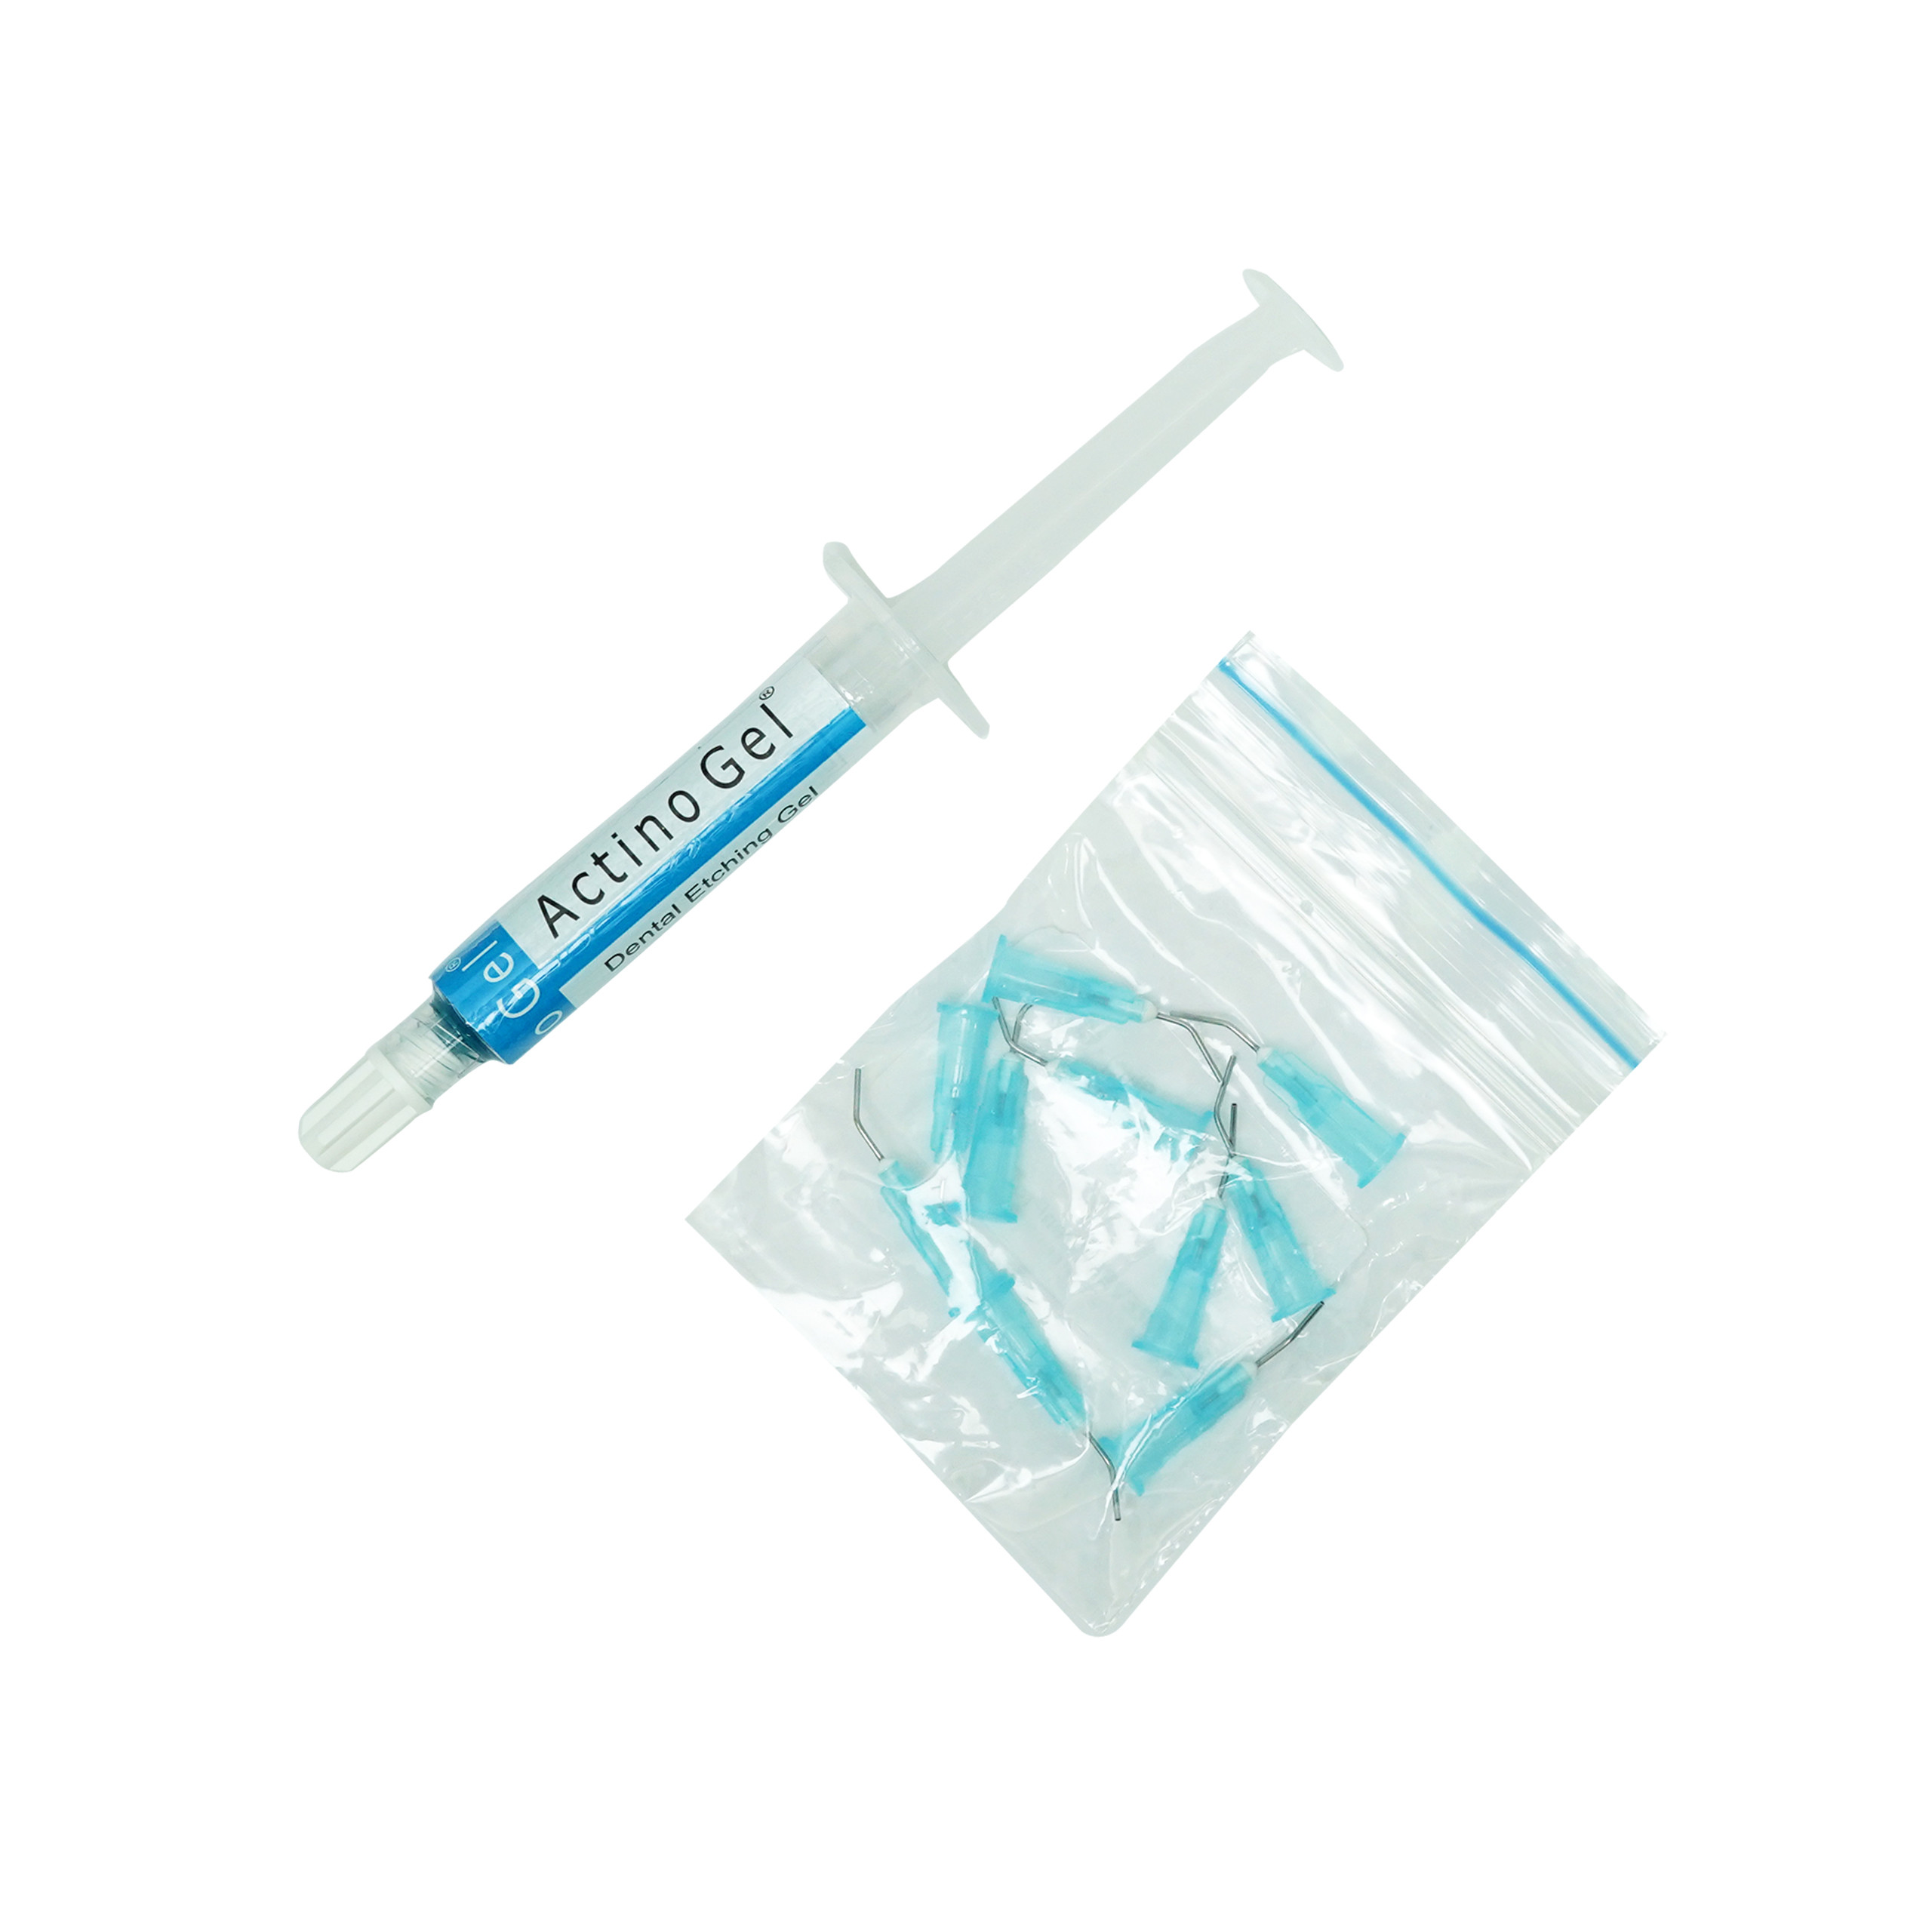 Prevest Denpro Actino Gel 5ml Syringe Dental Etchant